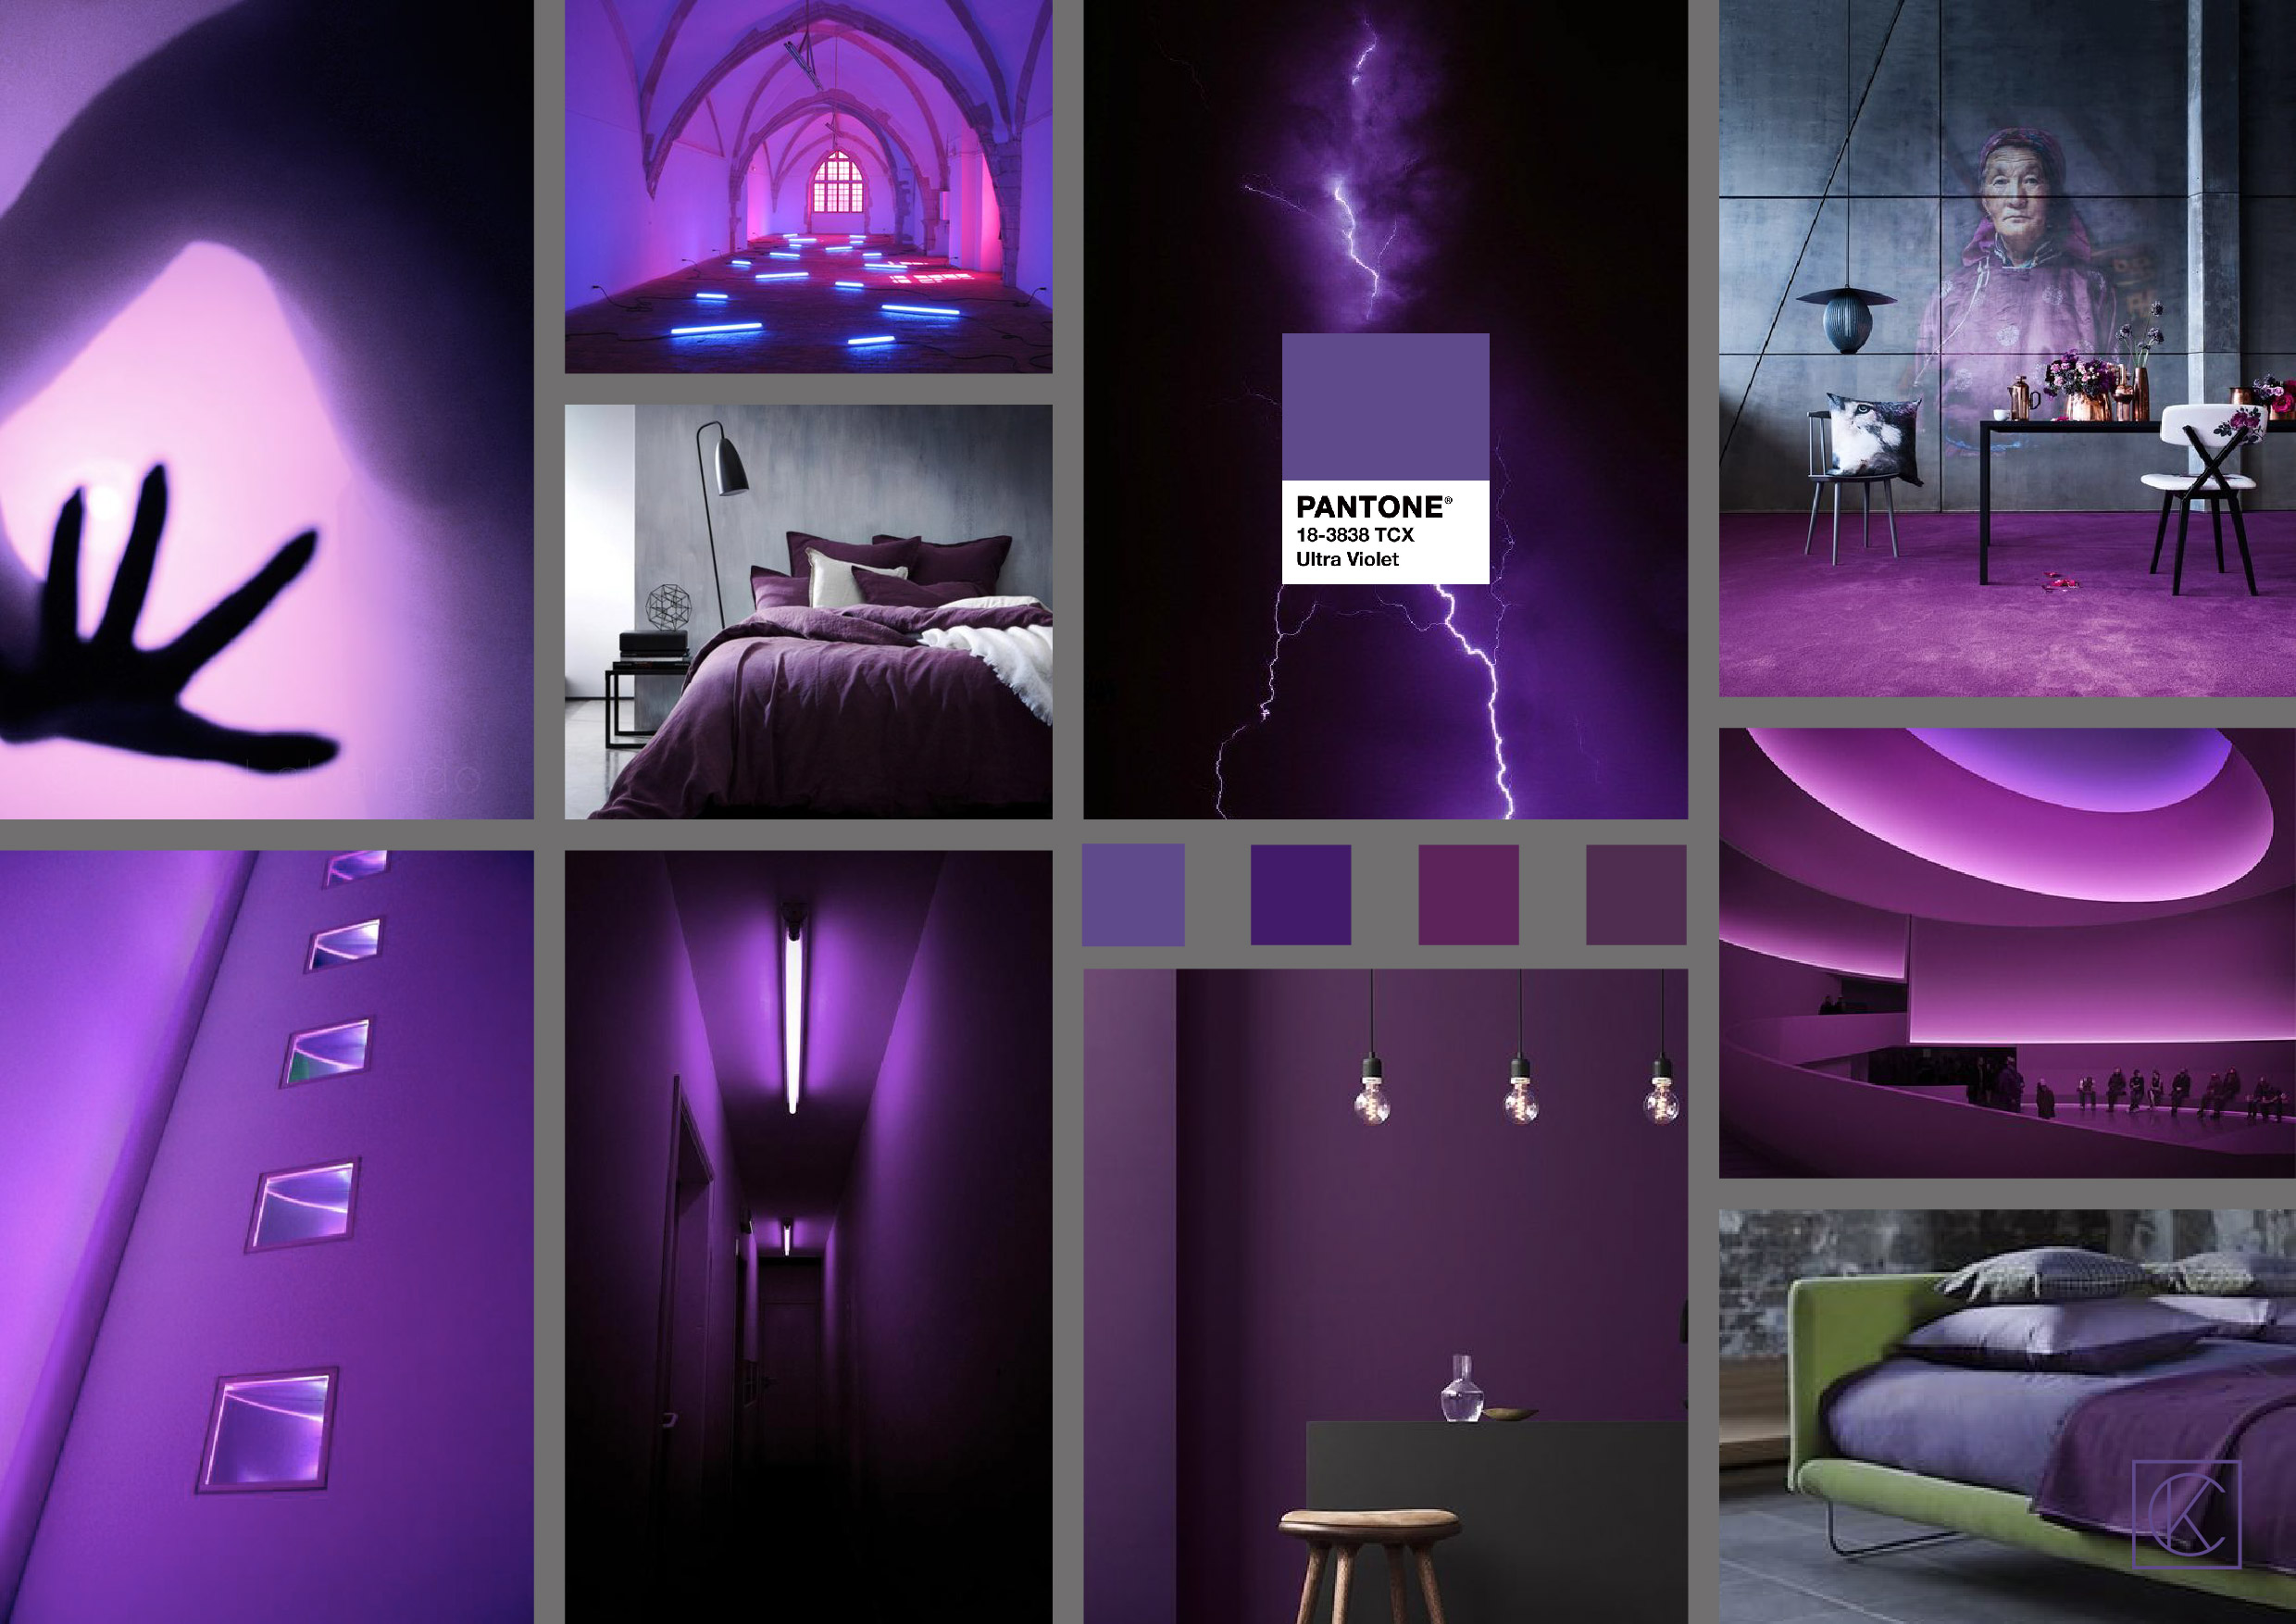 ultra-violet-pantone-trend-moodboard-wishlist-kc-01